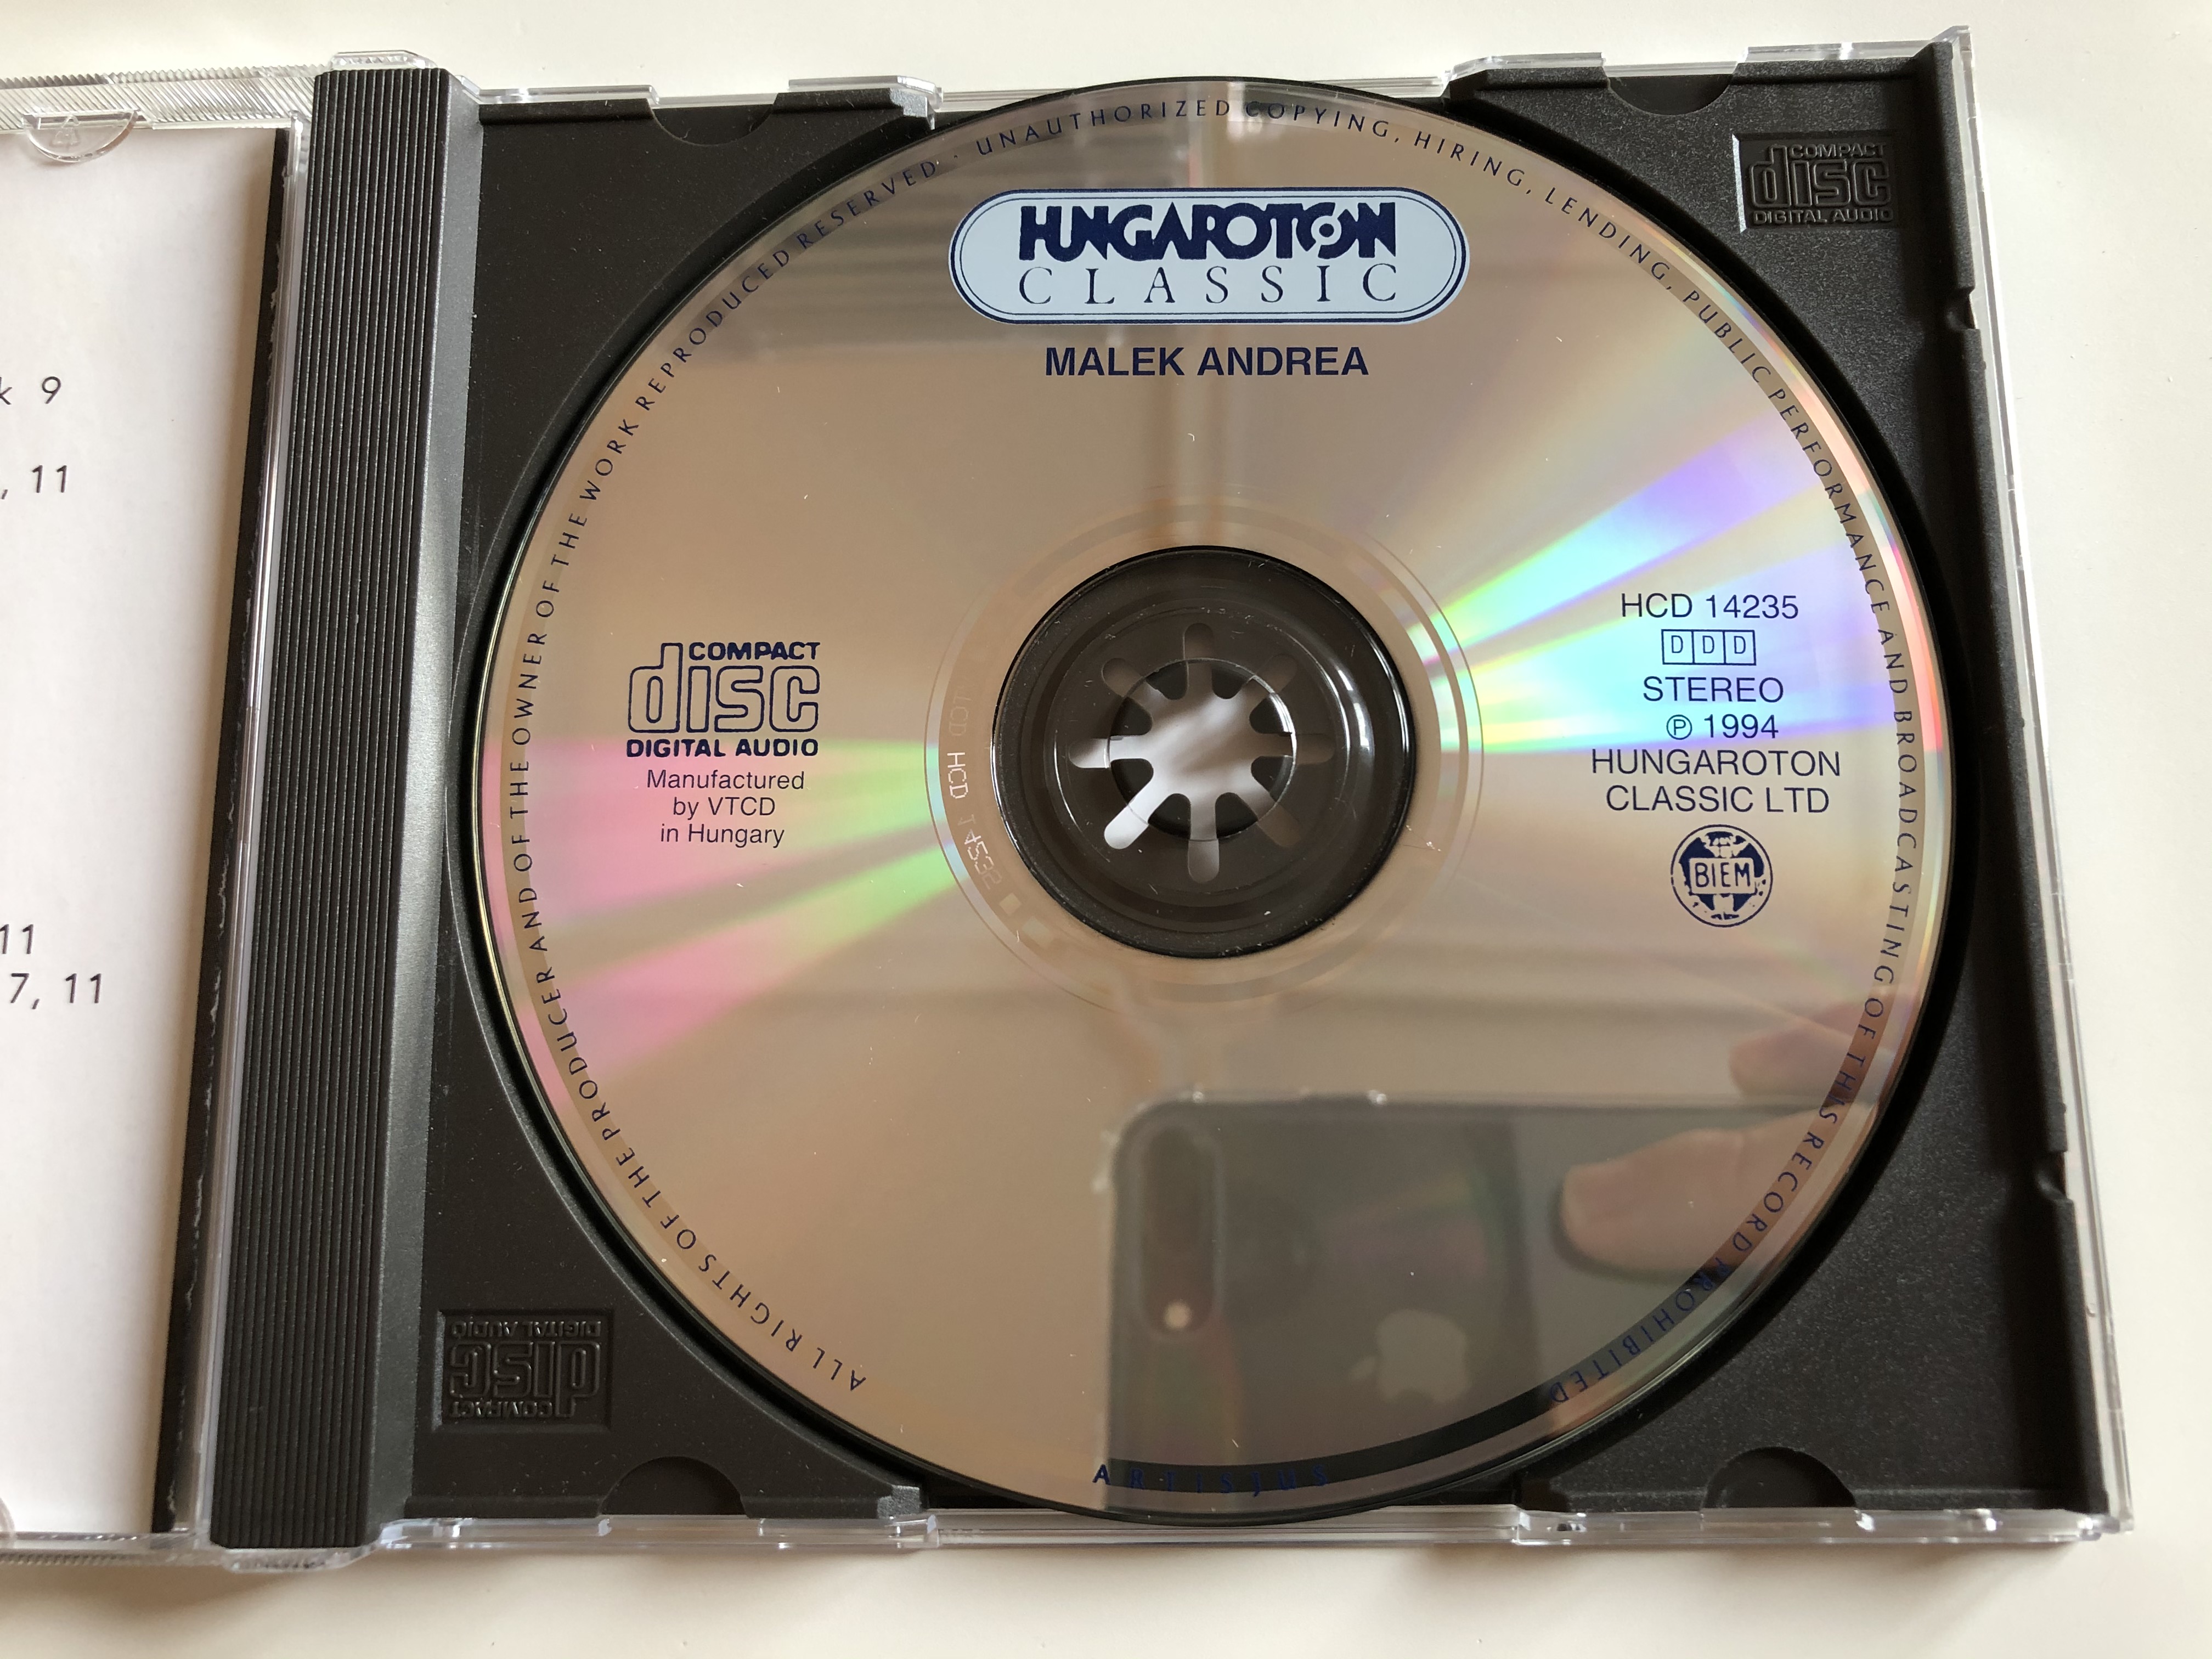 malek-andrea-hungaroton-classic-audio-cd-1994-stereo-hcd-14235-5-.jpg